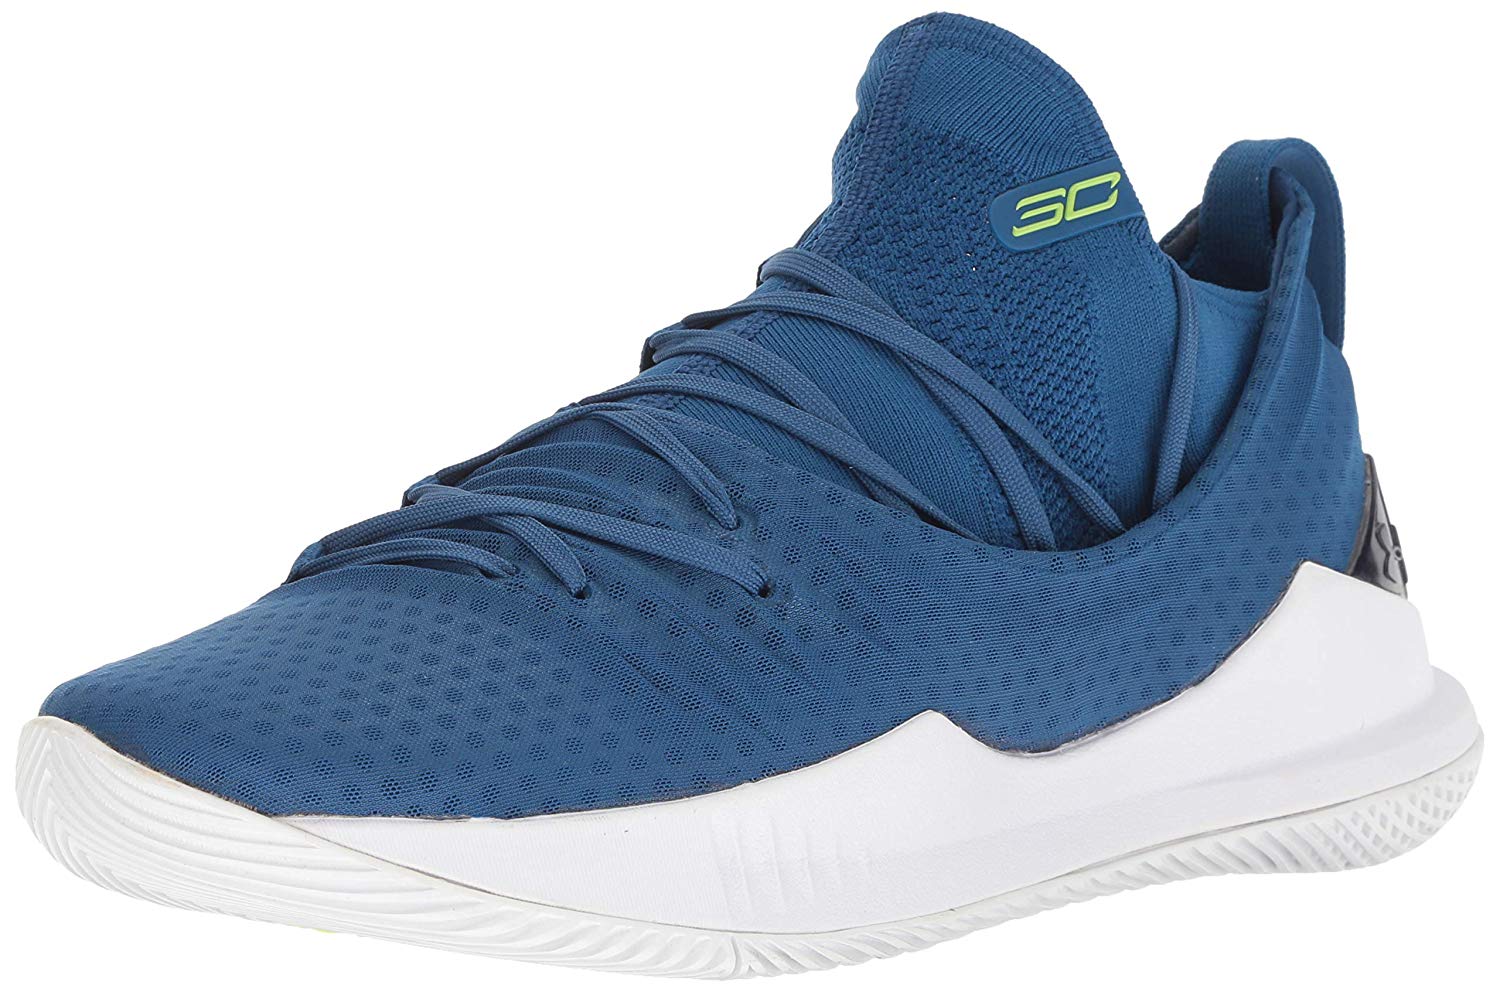 Basketball Shoe, Blue, Size 14.0 8Scb 